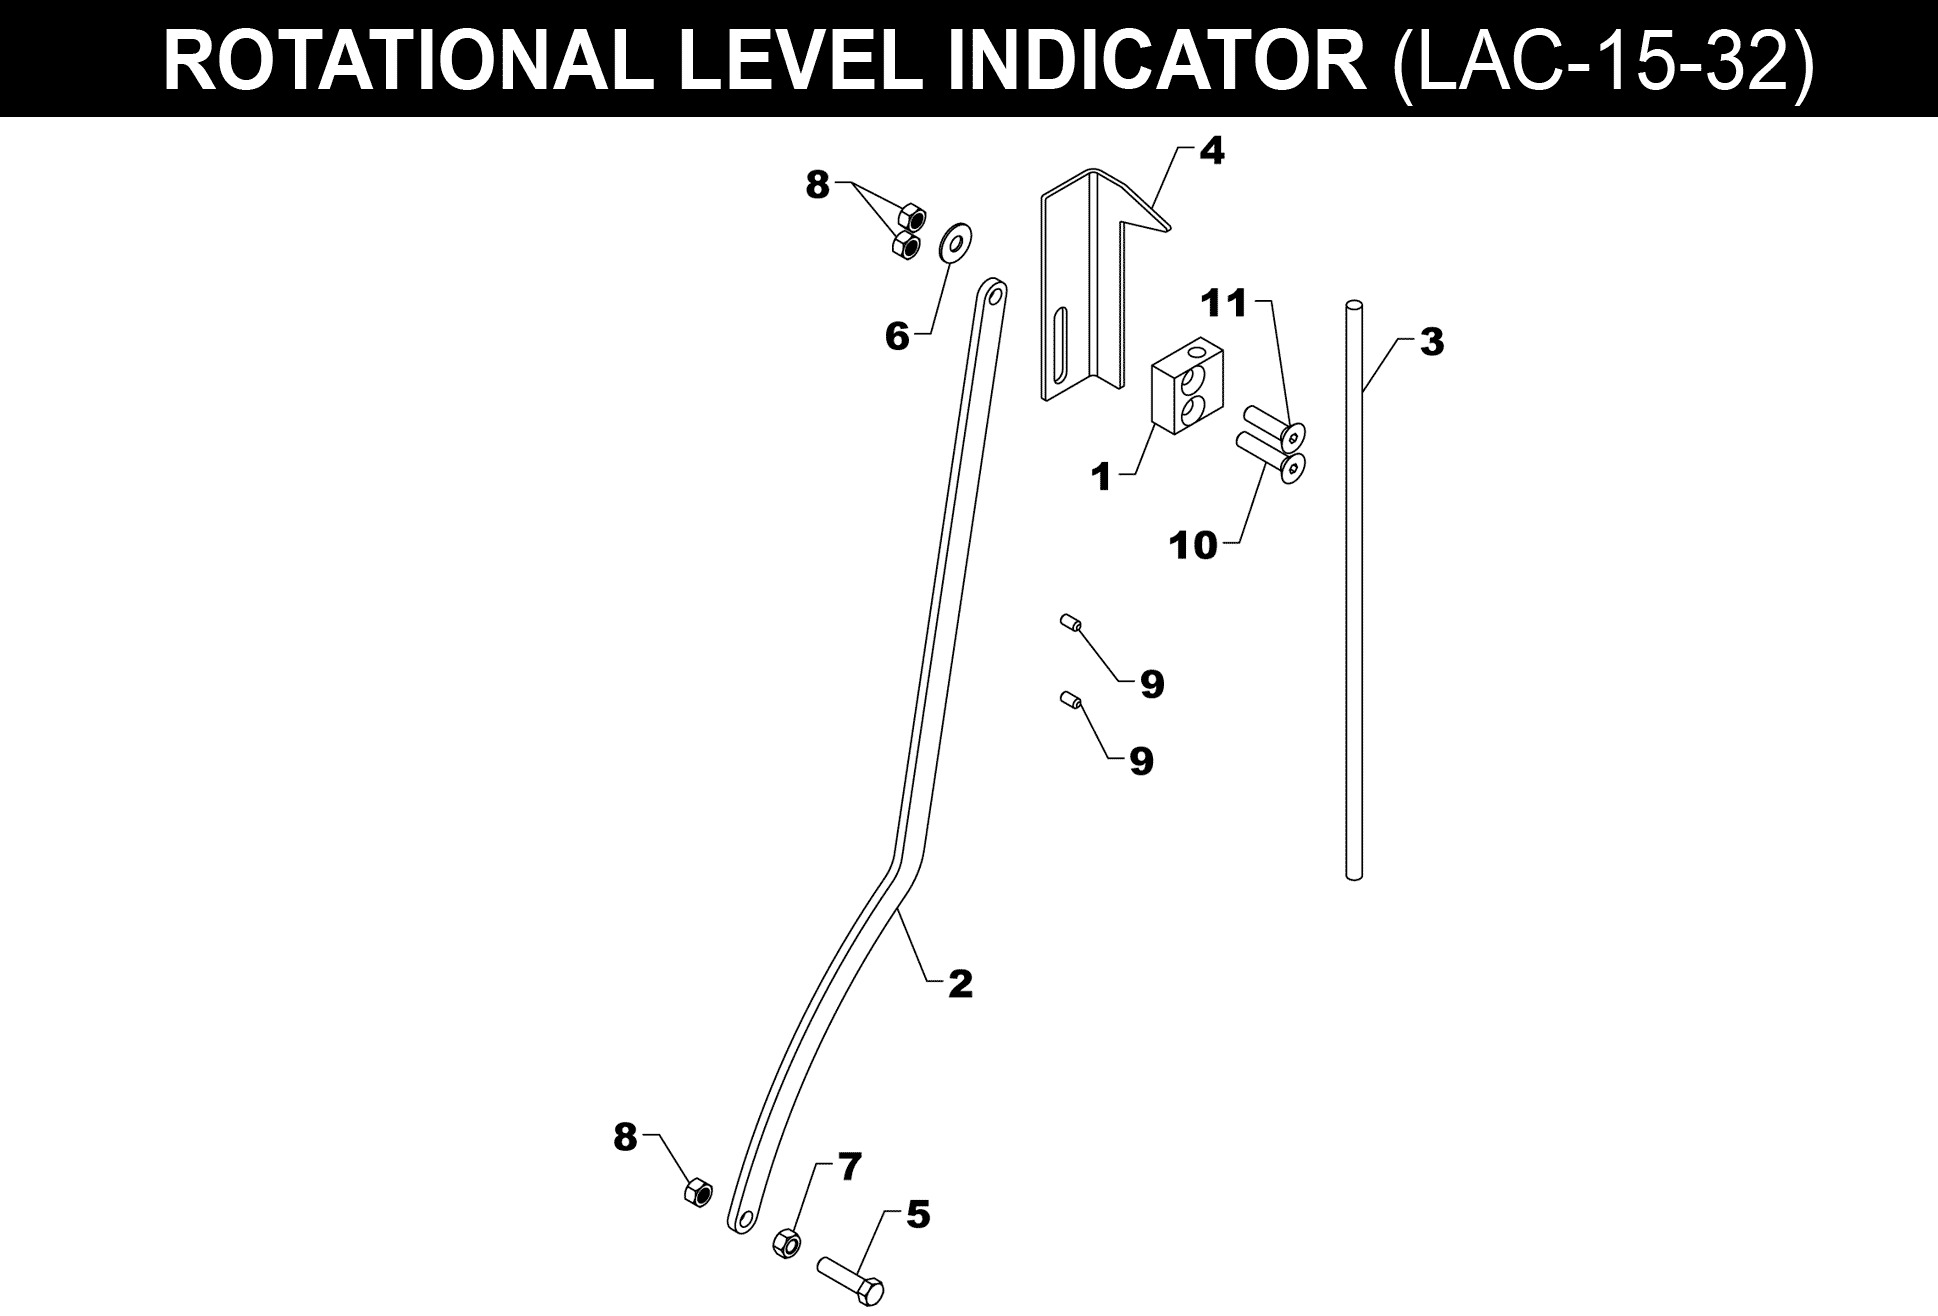 Bucket Indicator - LAC-15-32